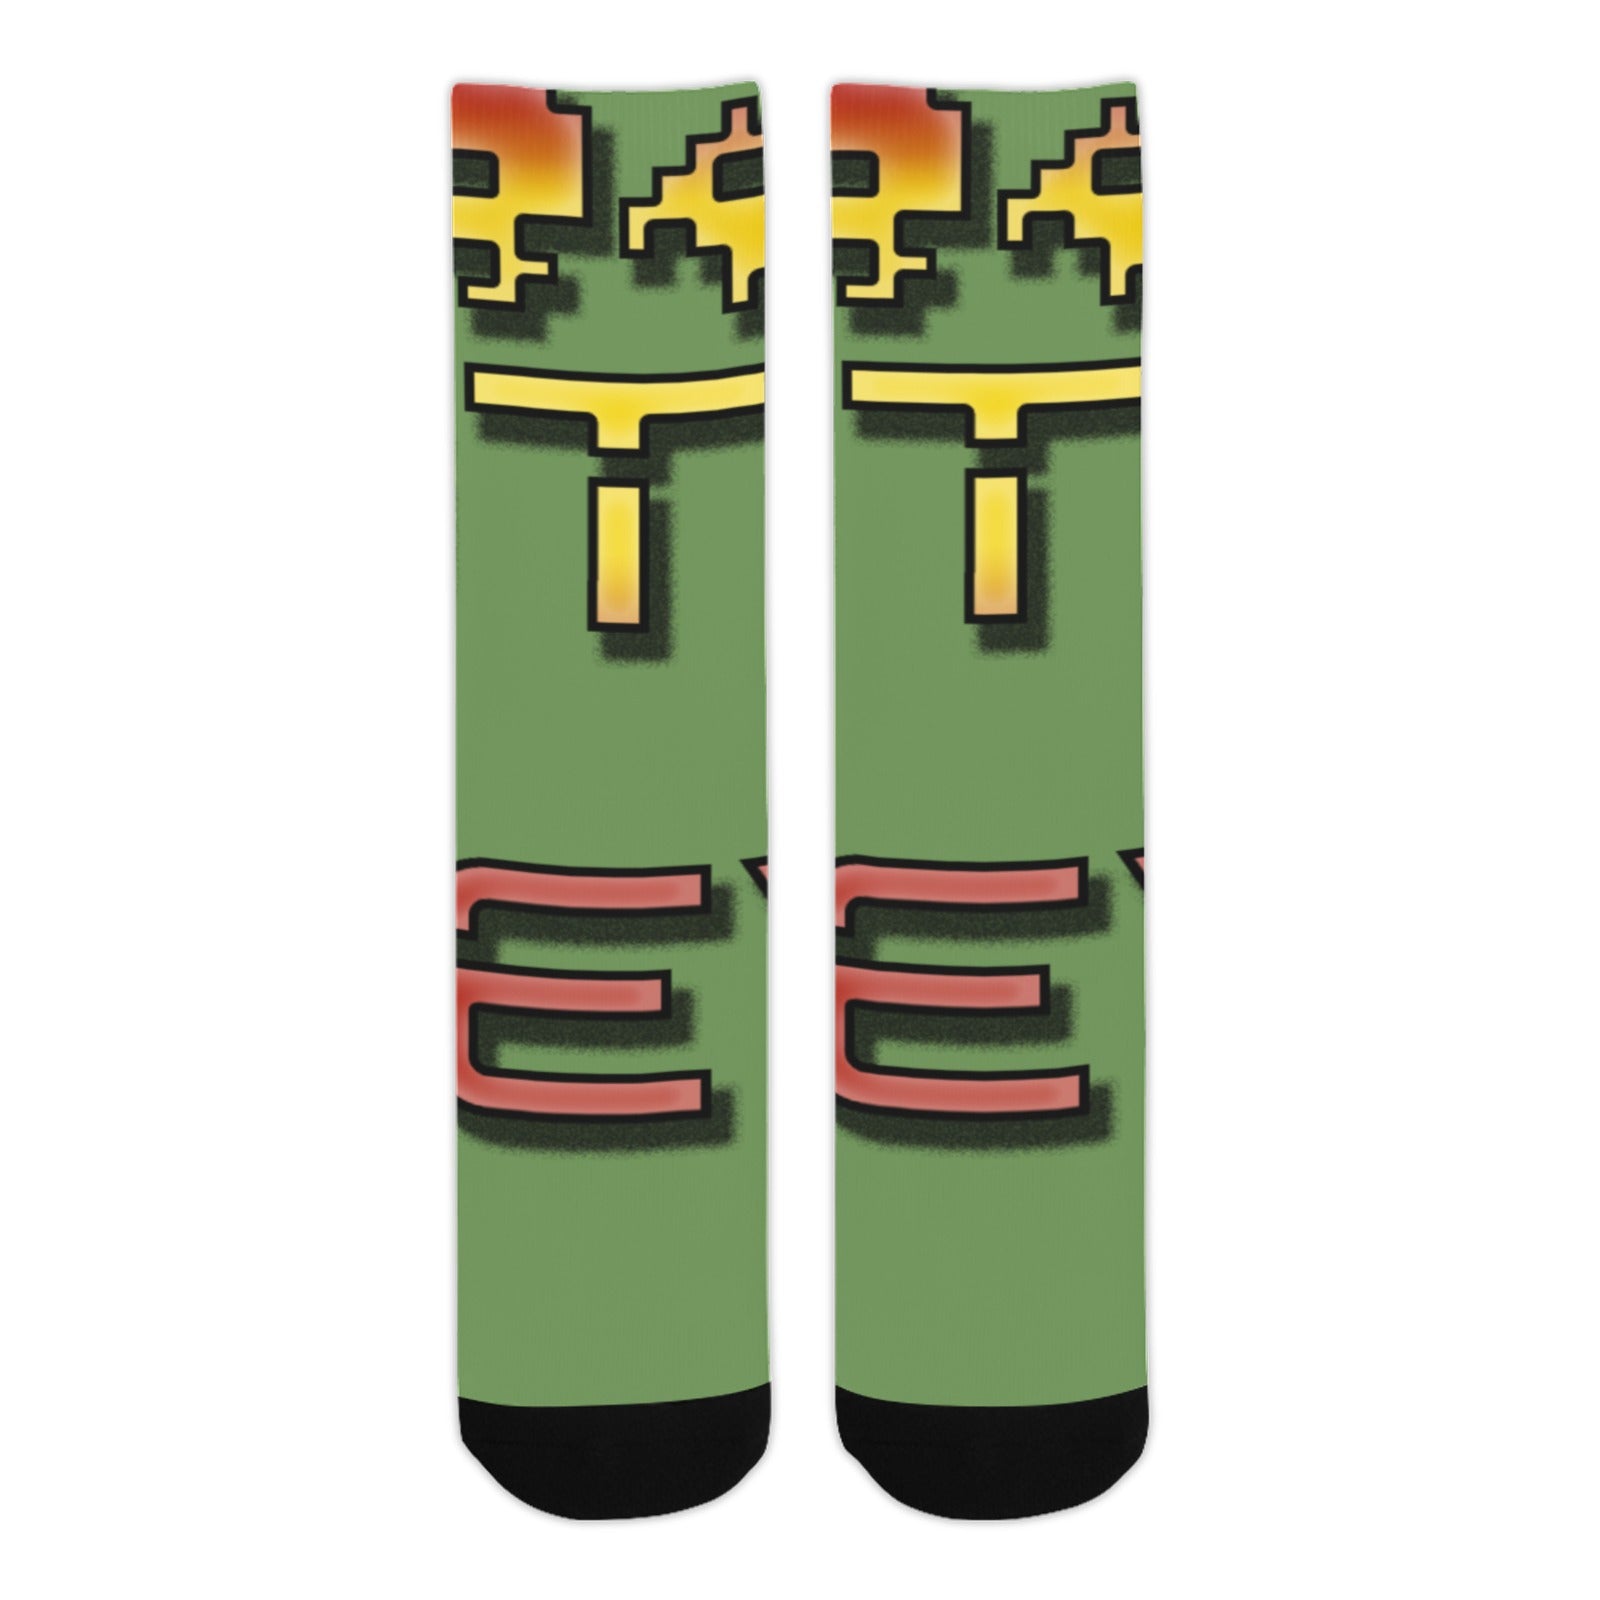 fz unisex socks - red one size / fz socks - green sublimated crew socks(made in usa)